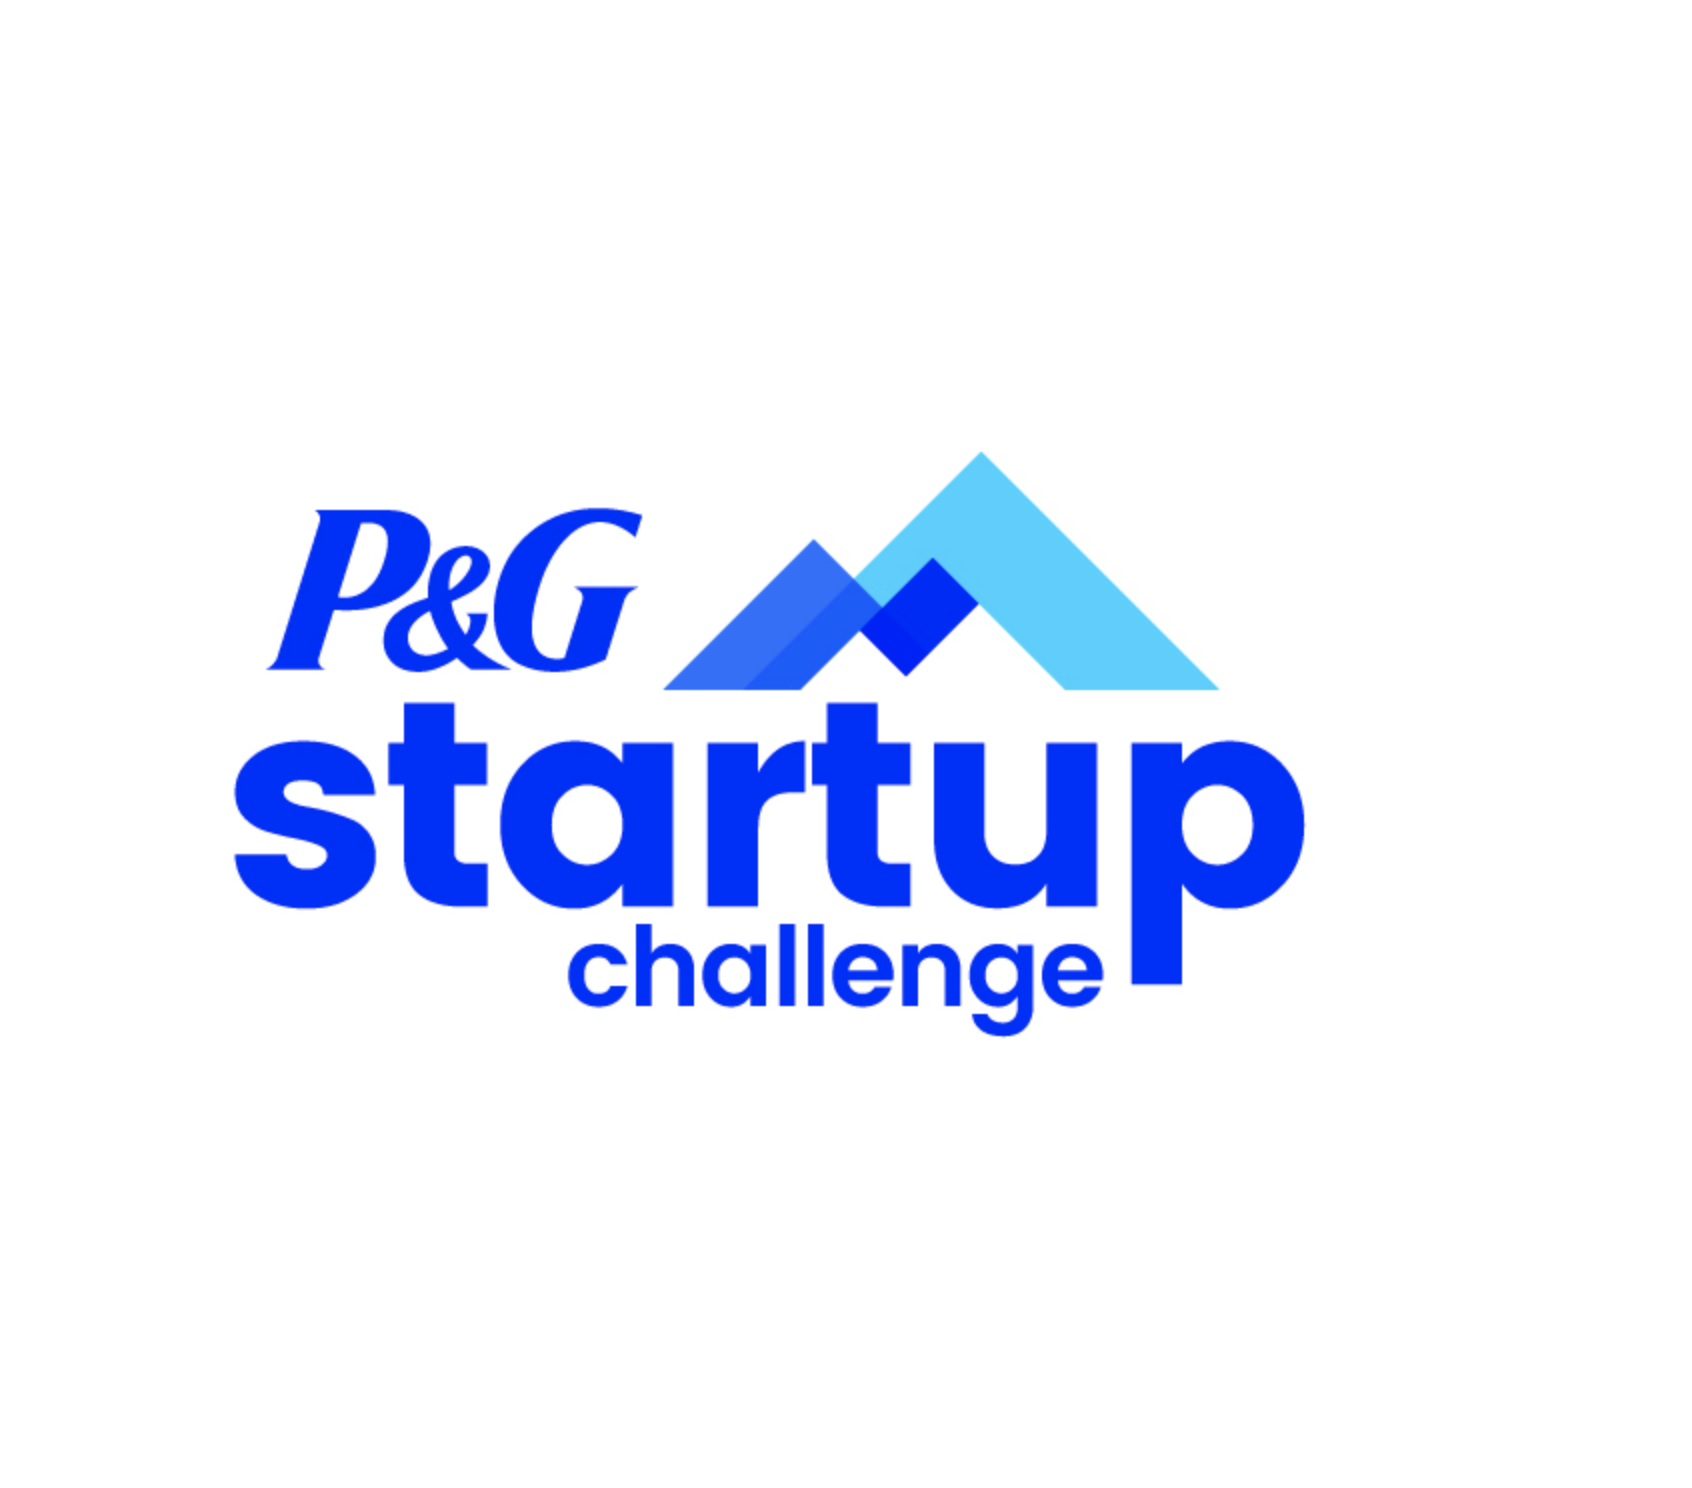 P&G Startup Challenge